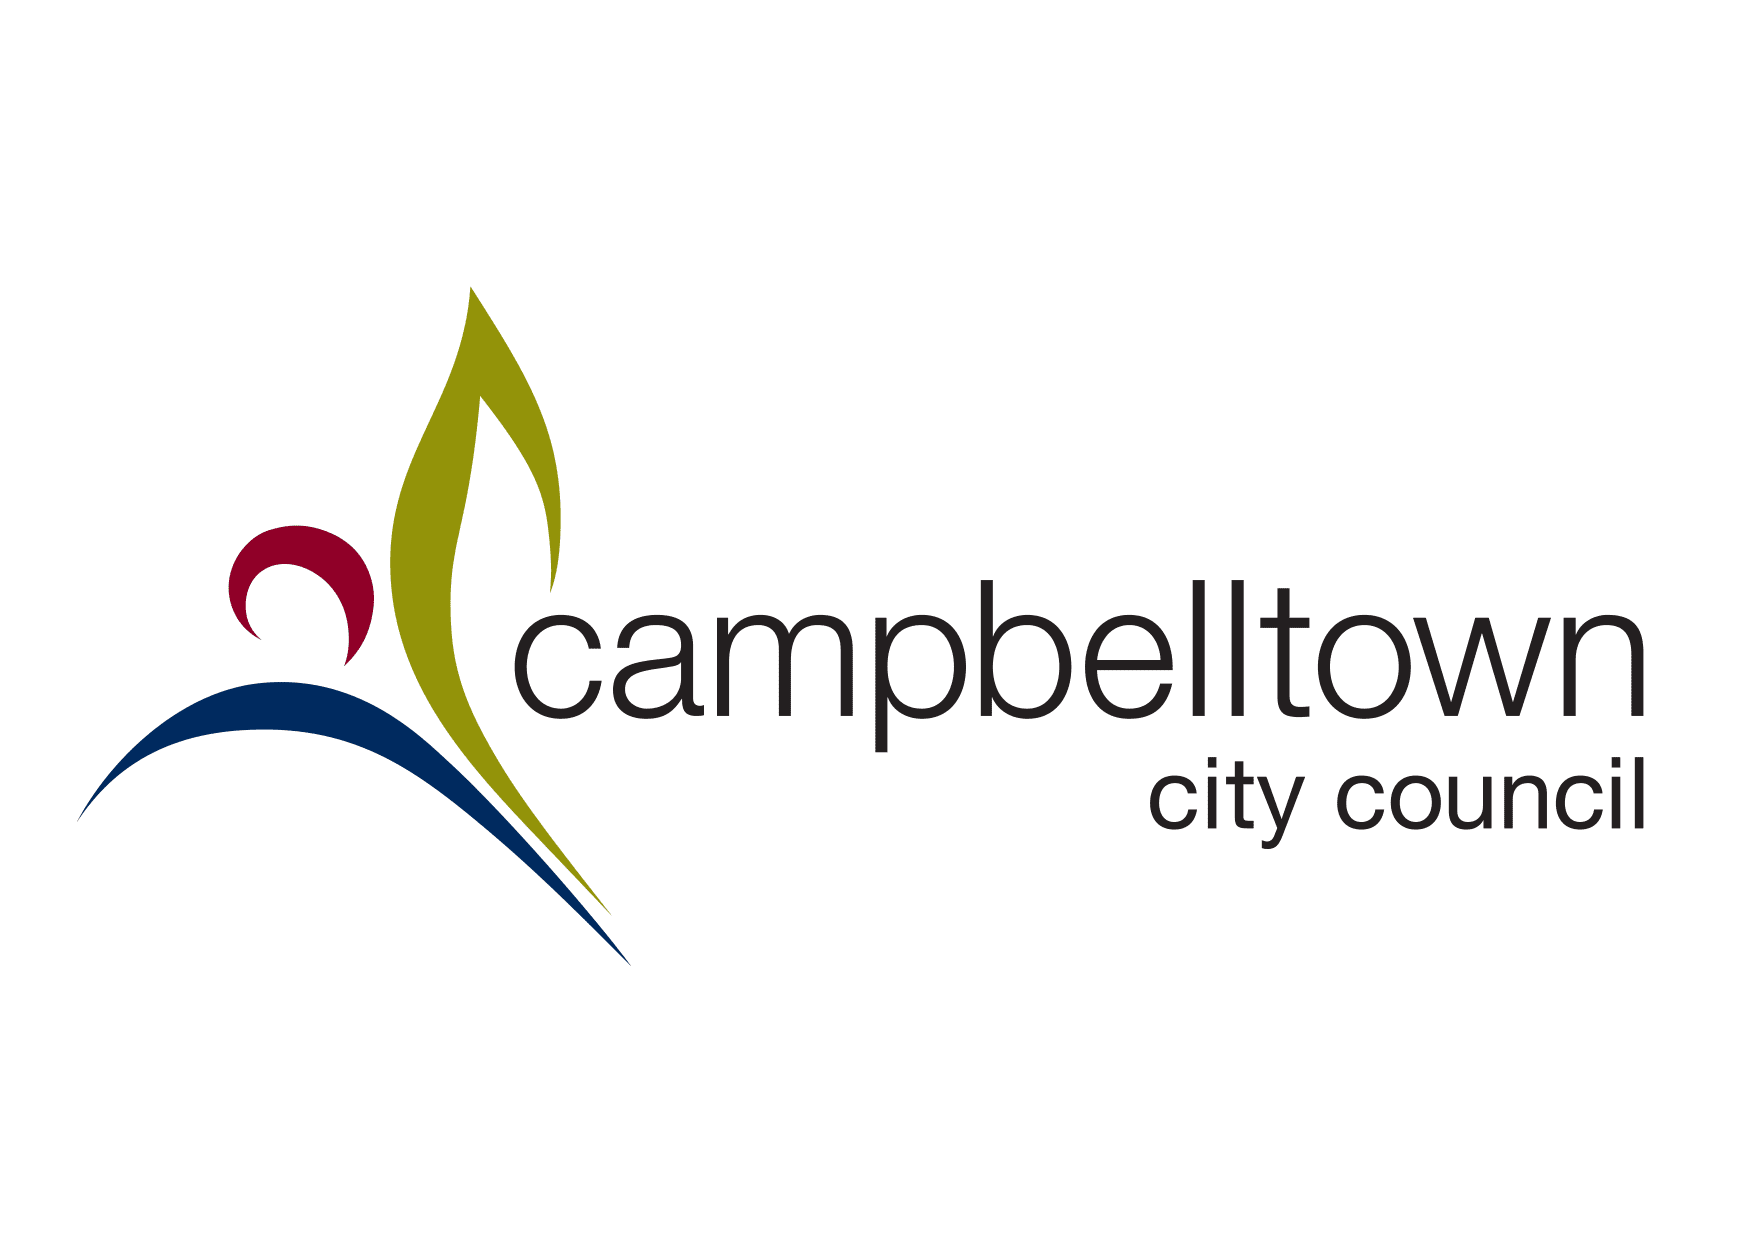 Campbelltown City Council logo